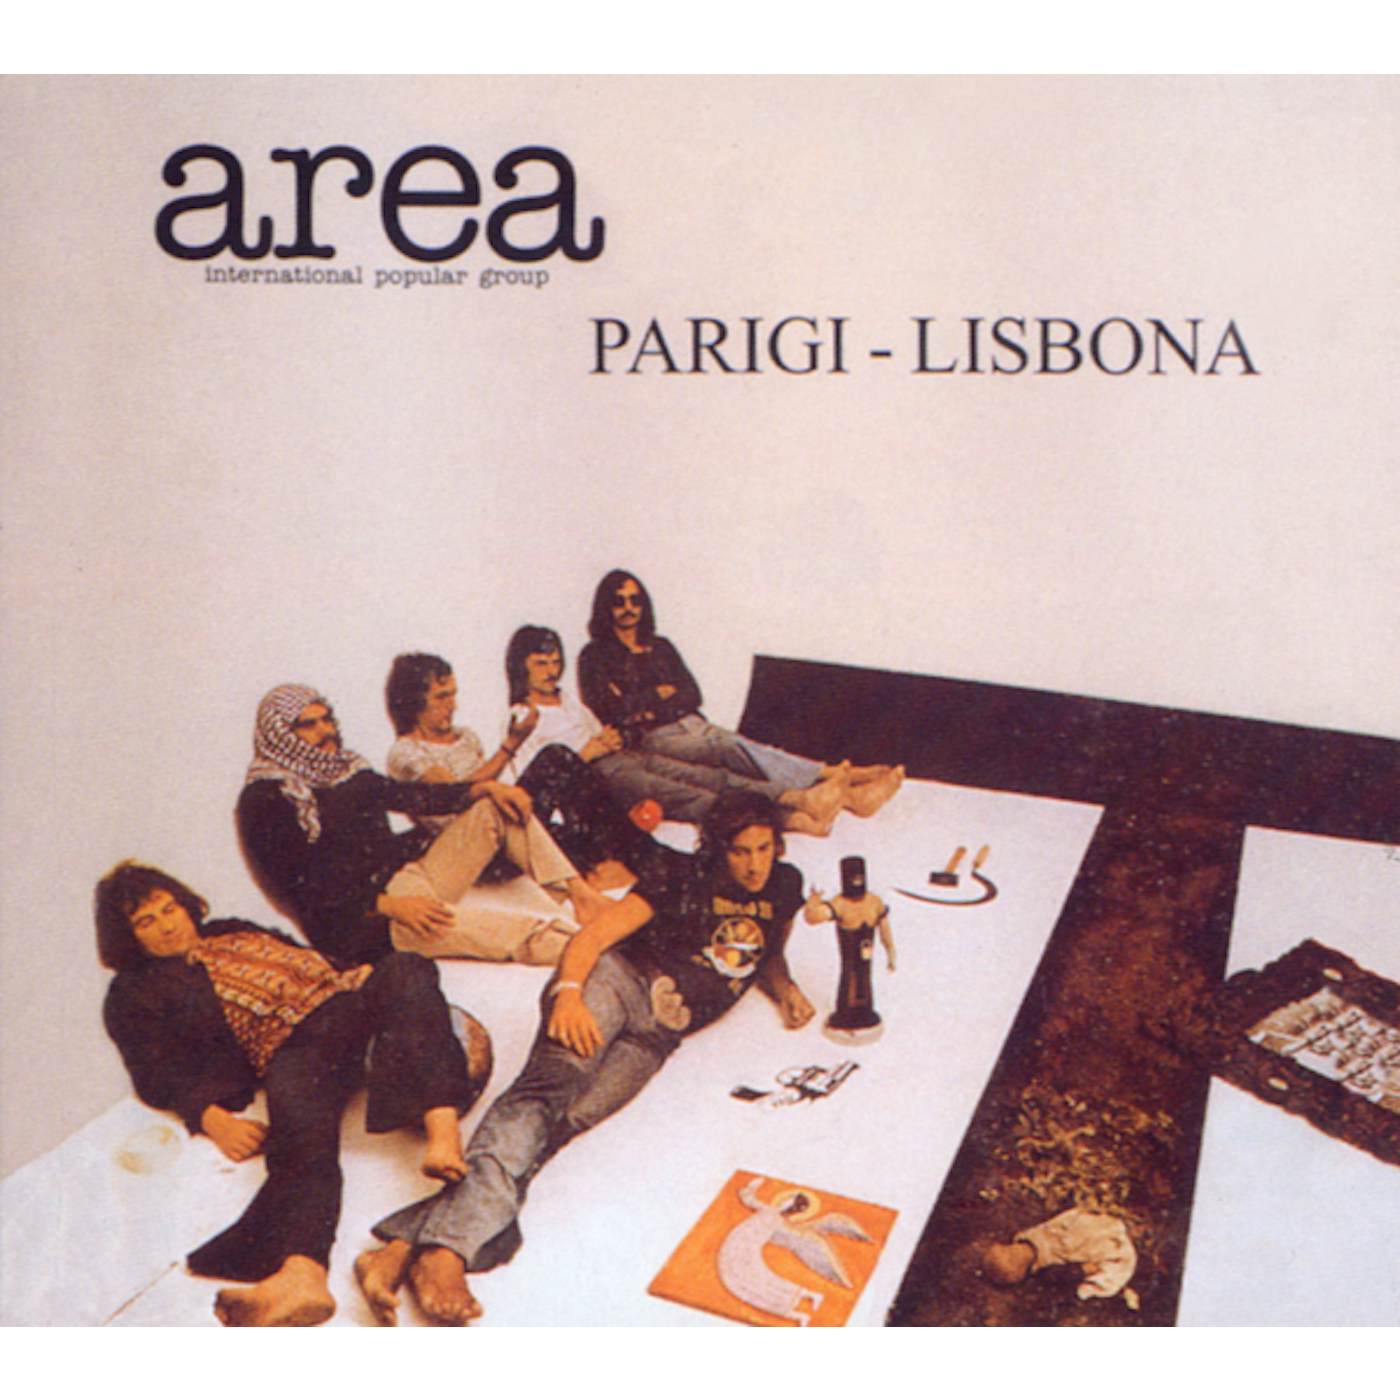 Area PARIGI-LISBONA CD